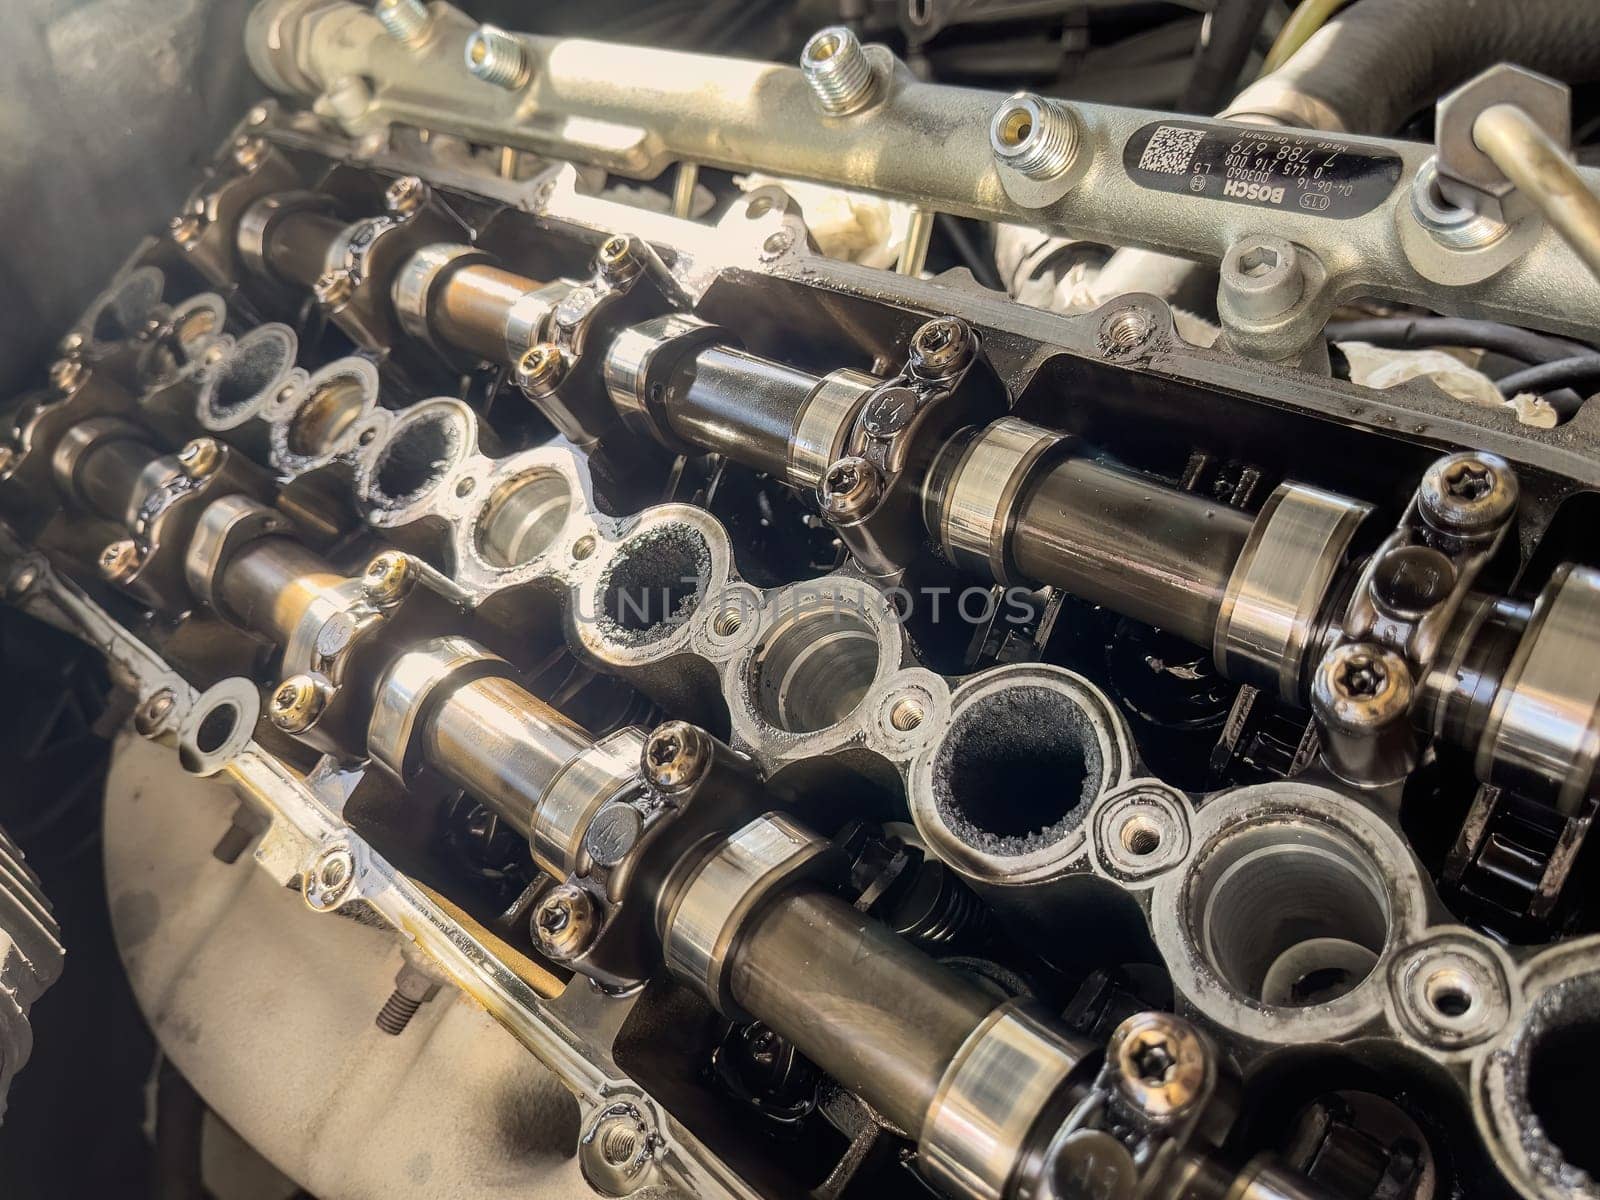 Diesel Engine Camshaft Detail by pippocarlot